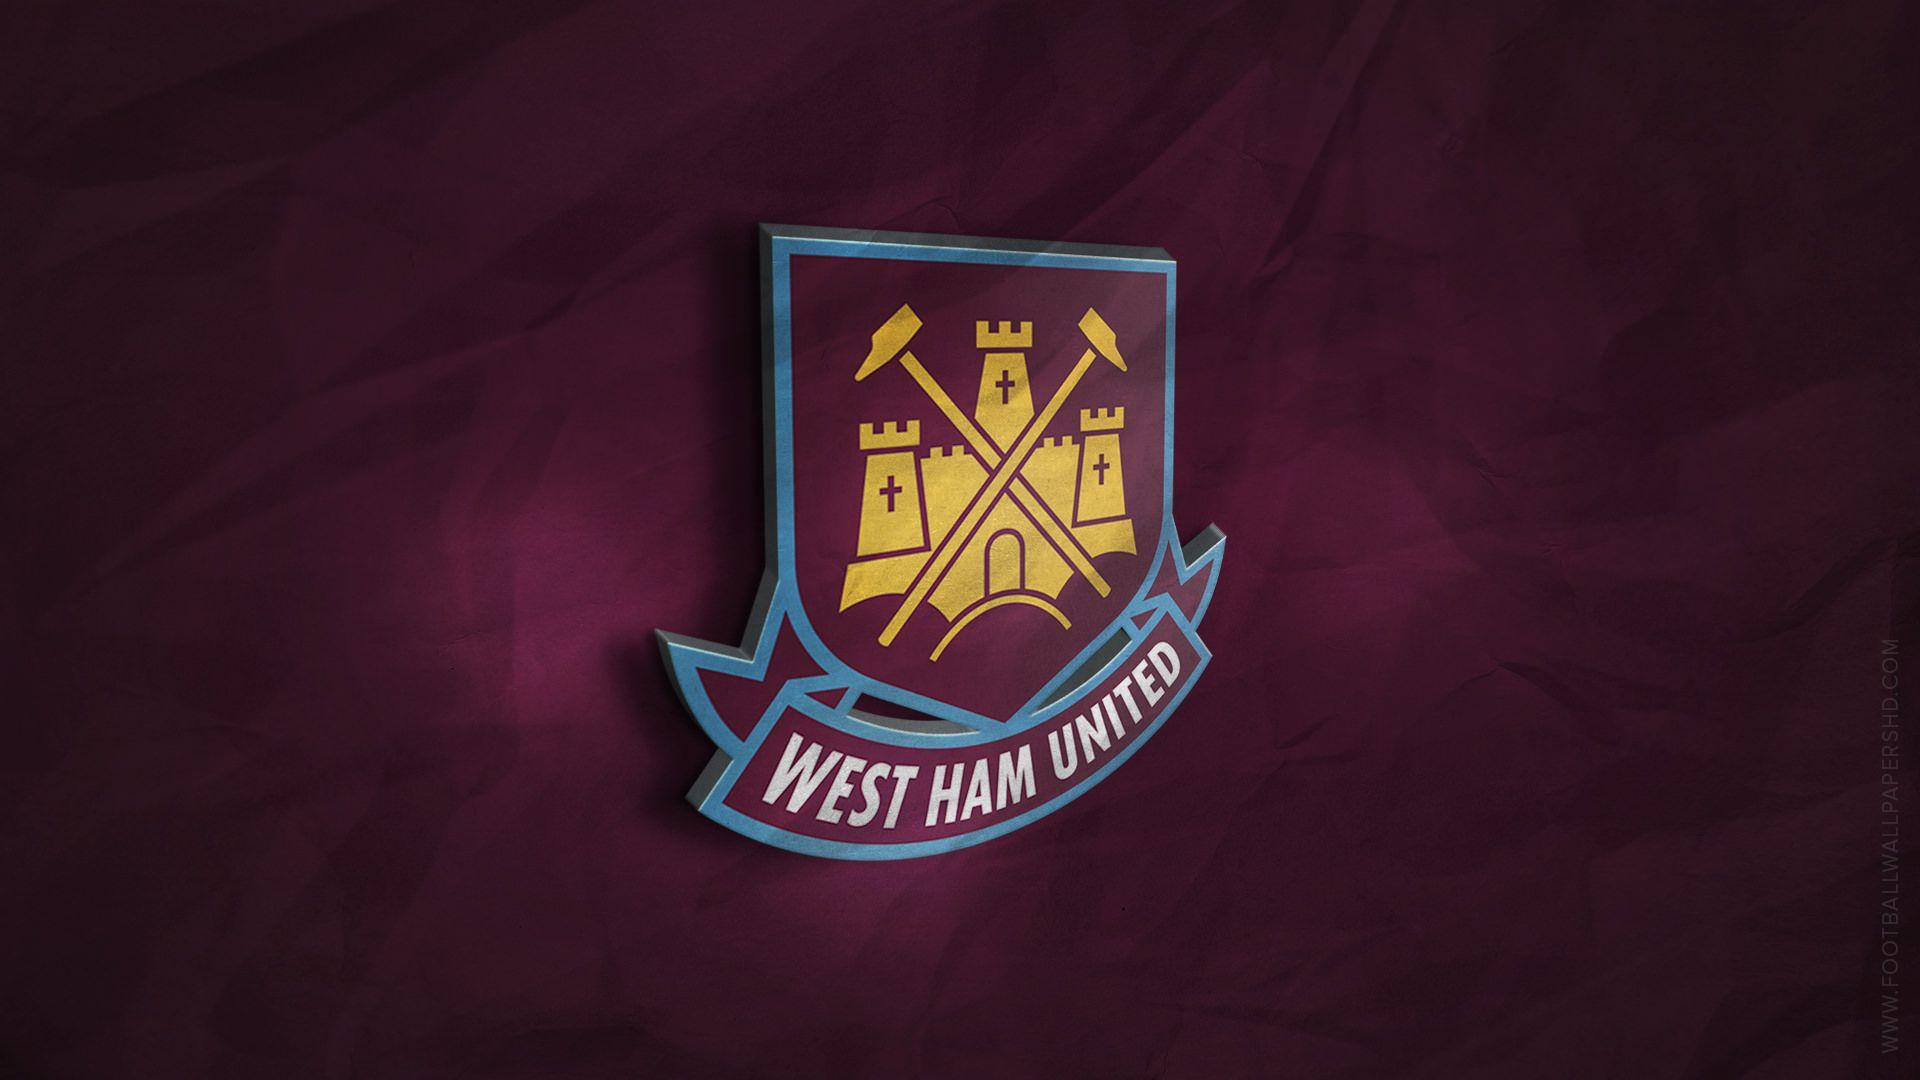 West Ham United 3D Logo Wallpaper. influence. West